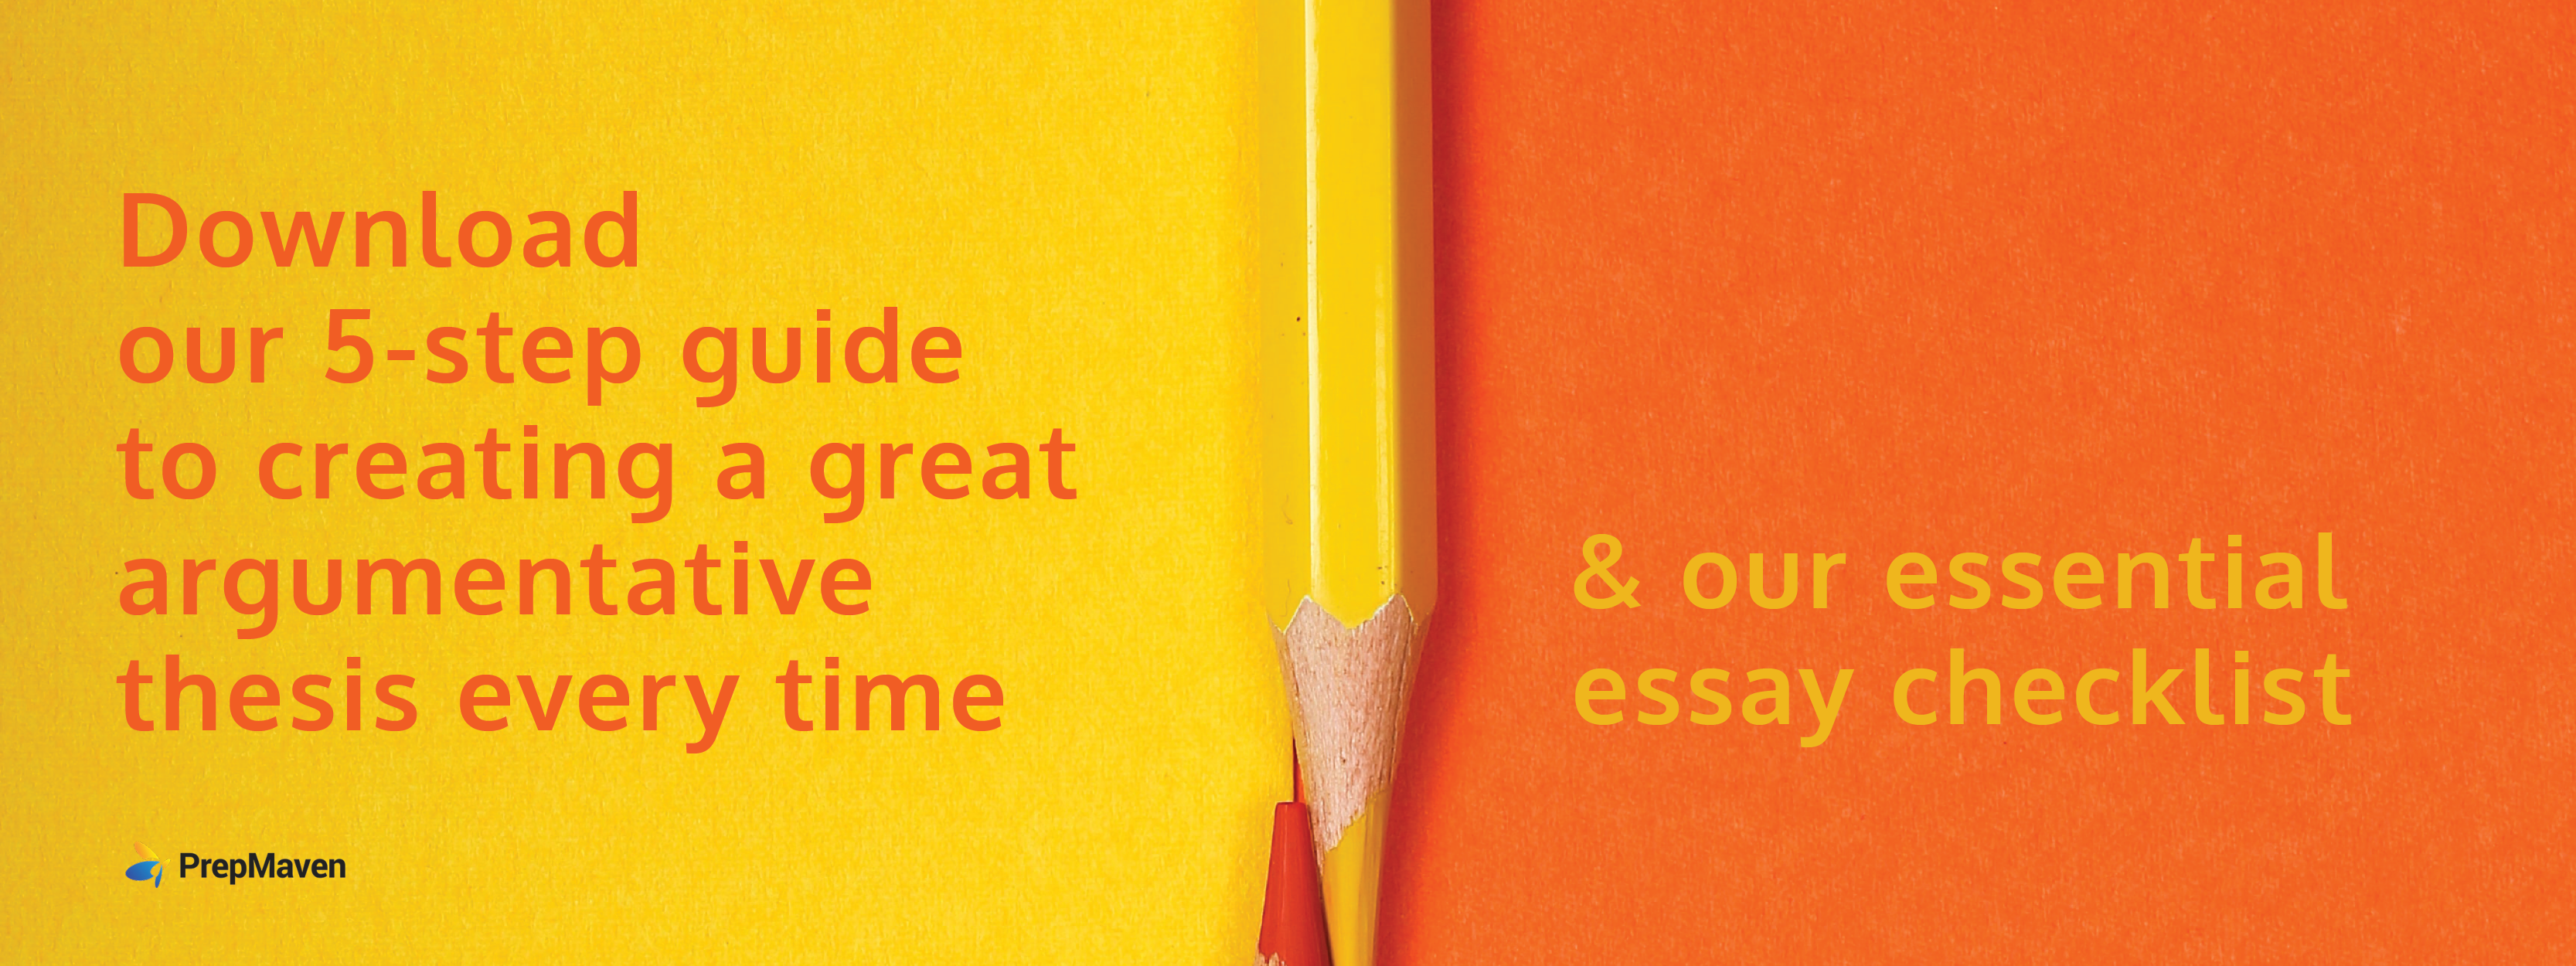 99 Great Handpicked Ideas for Argumentative Essays - PrepMaven